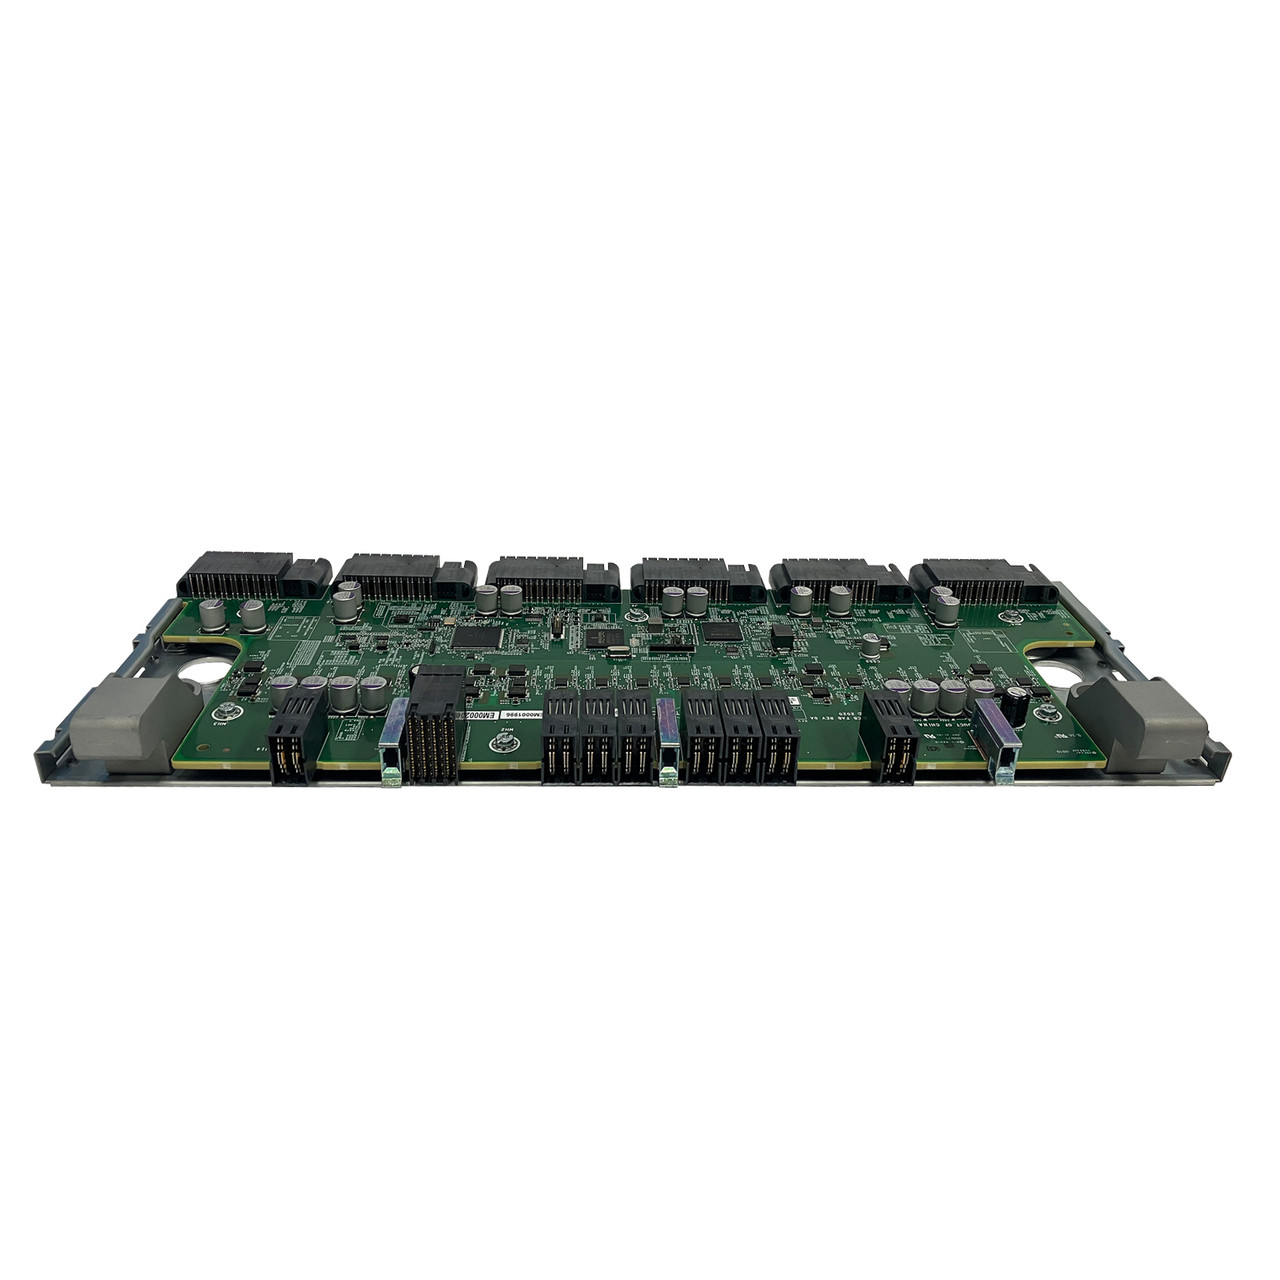 HPe P35443-001  Power Backplane PCIe GPU P19154-001